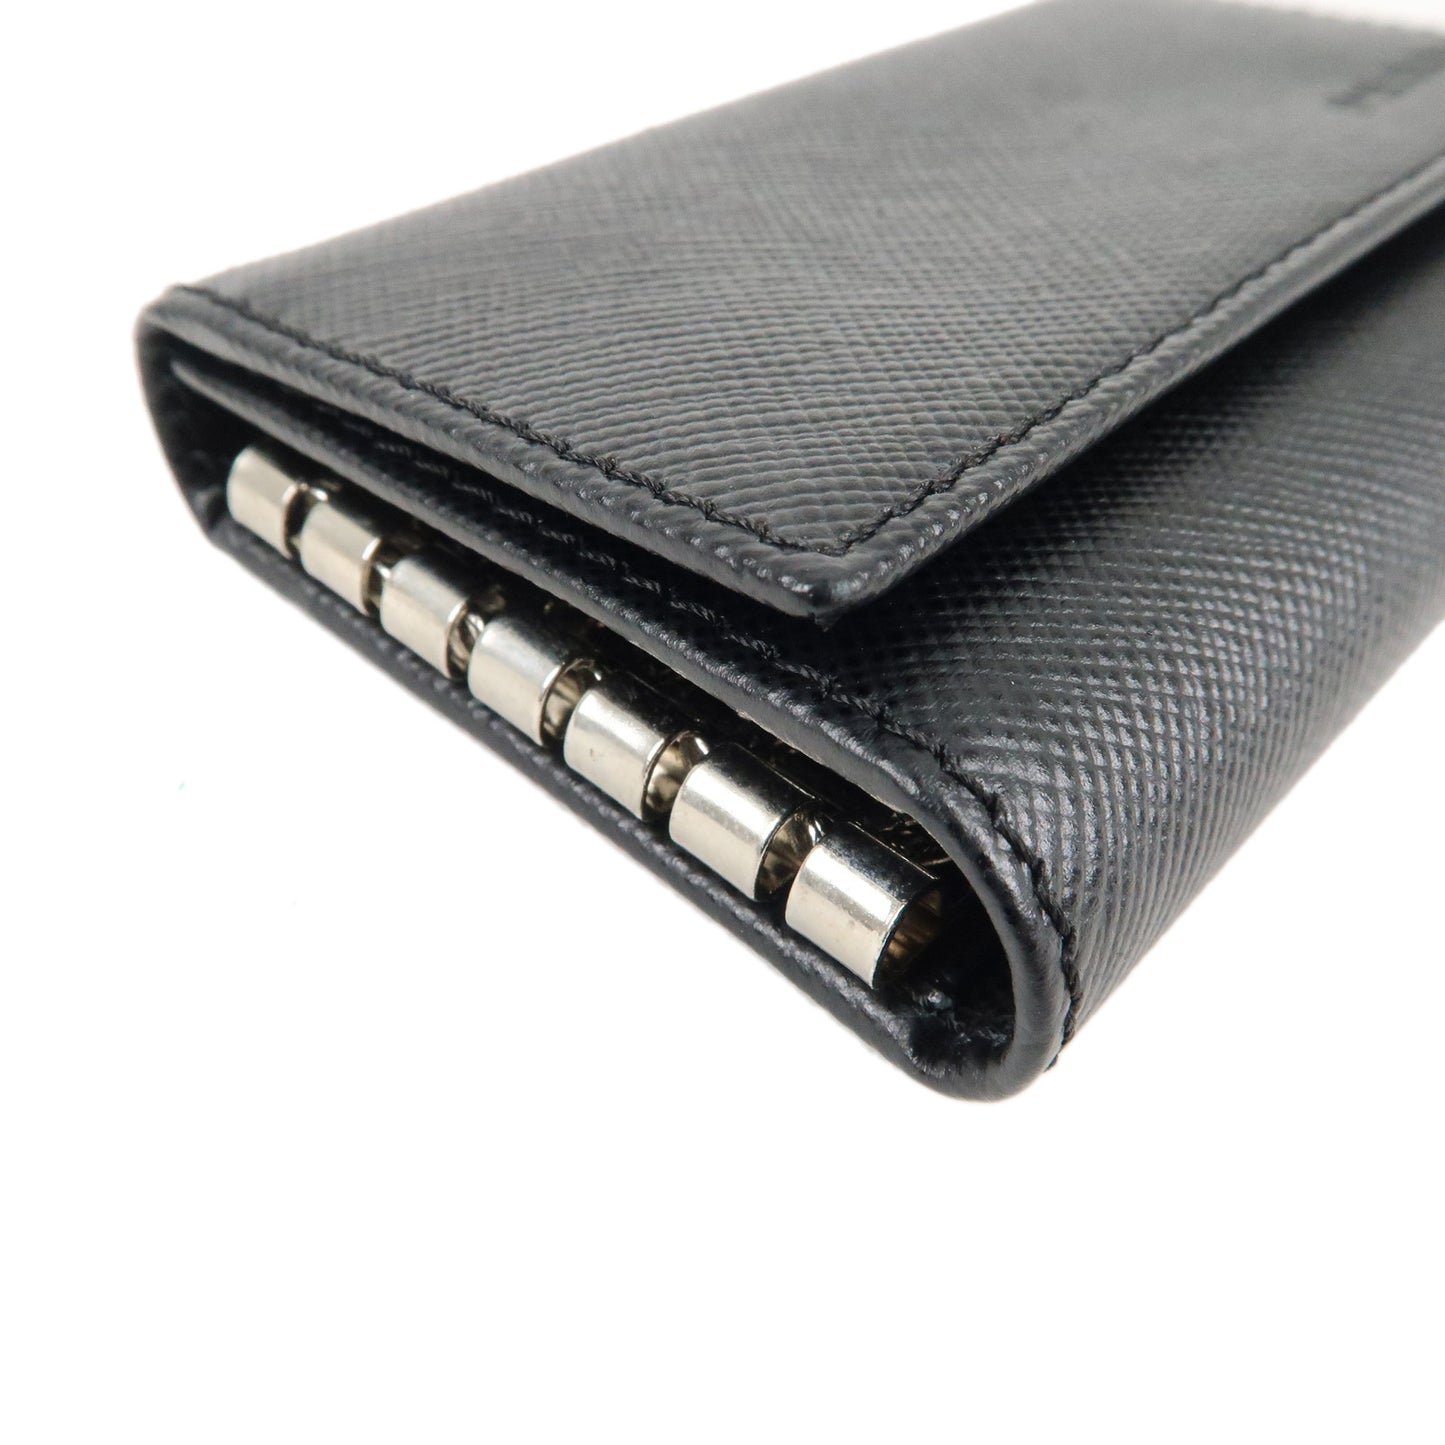 PRADA Saffiano Leather 6 Key Case Key Holder Black M25U